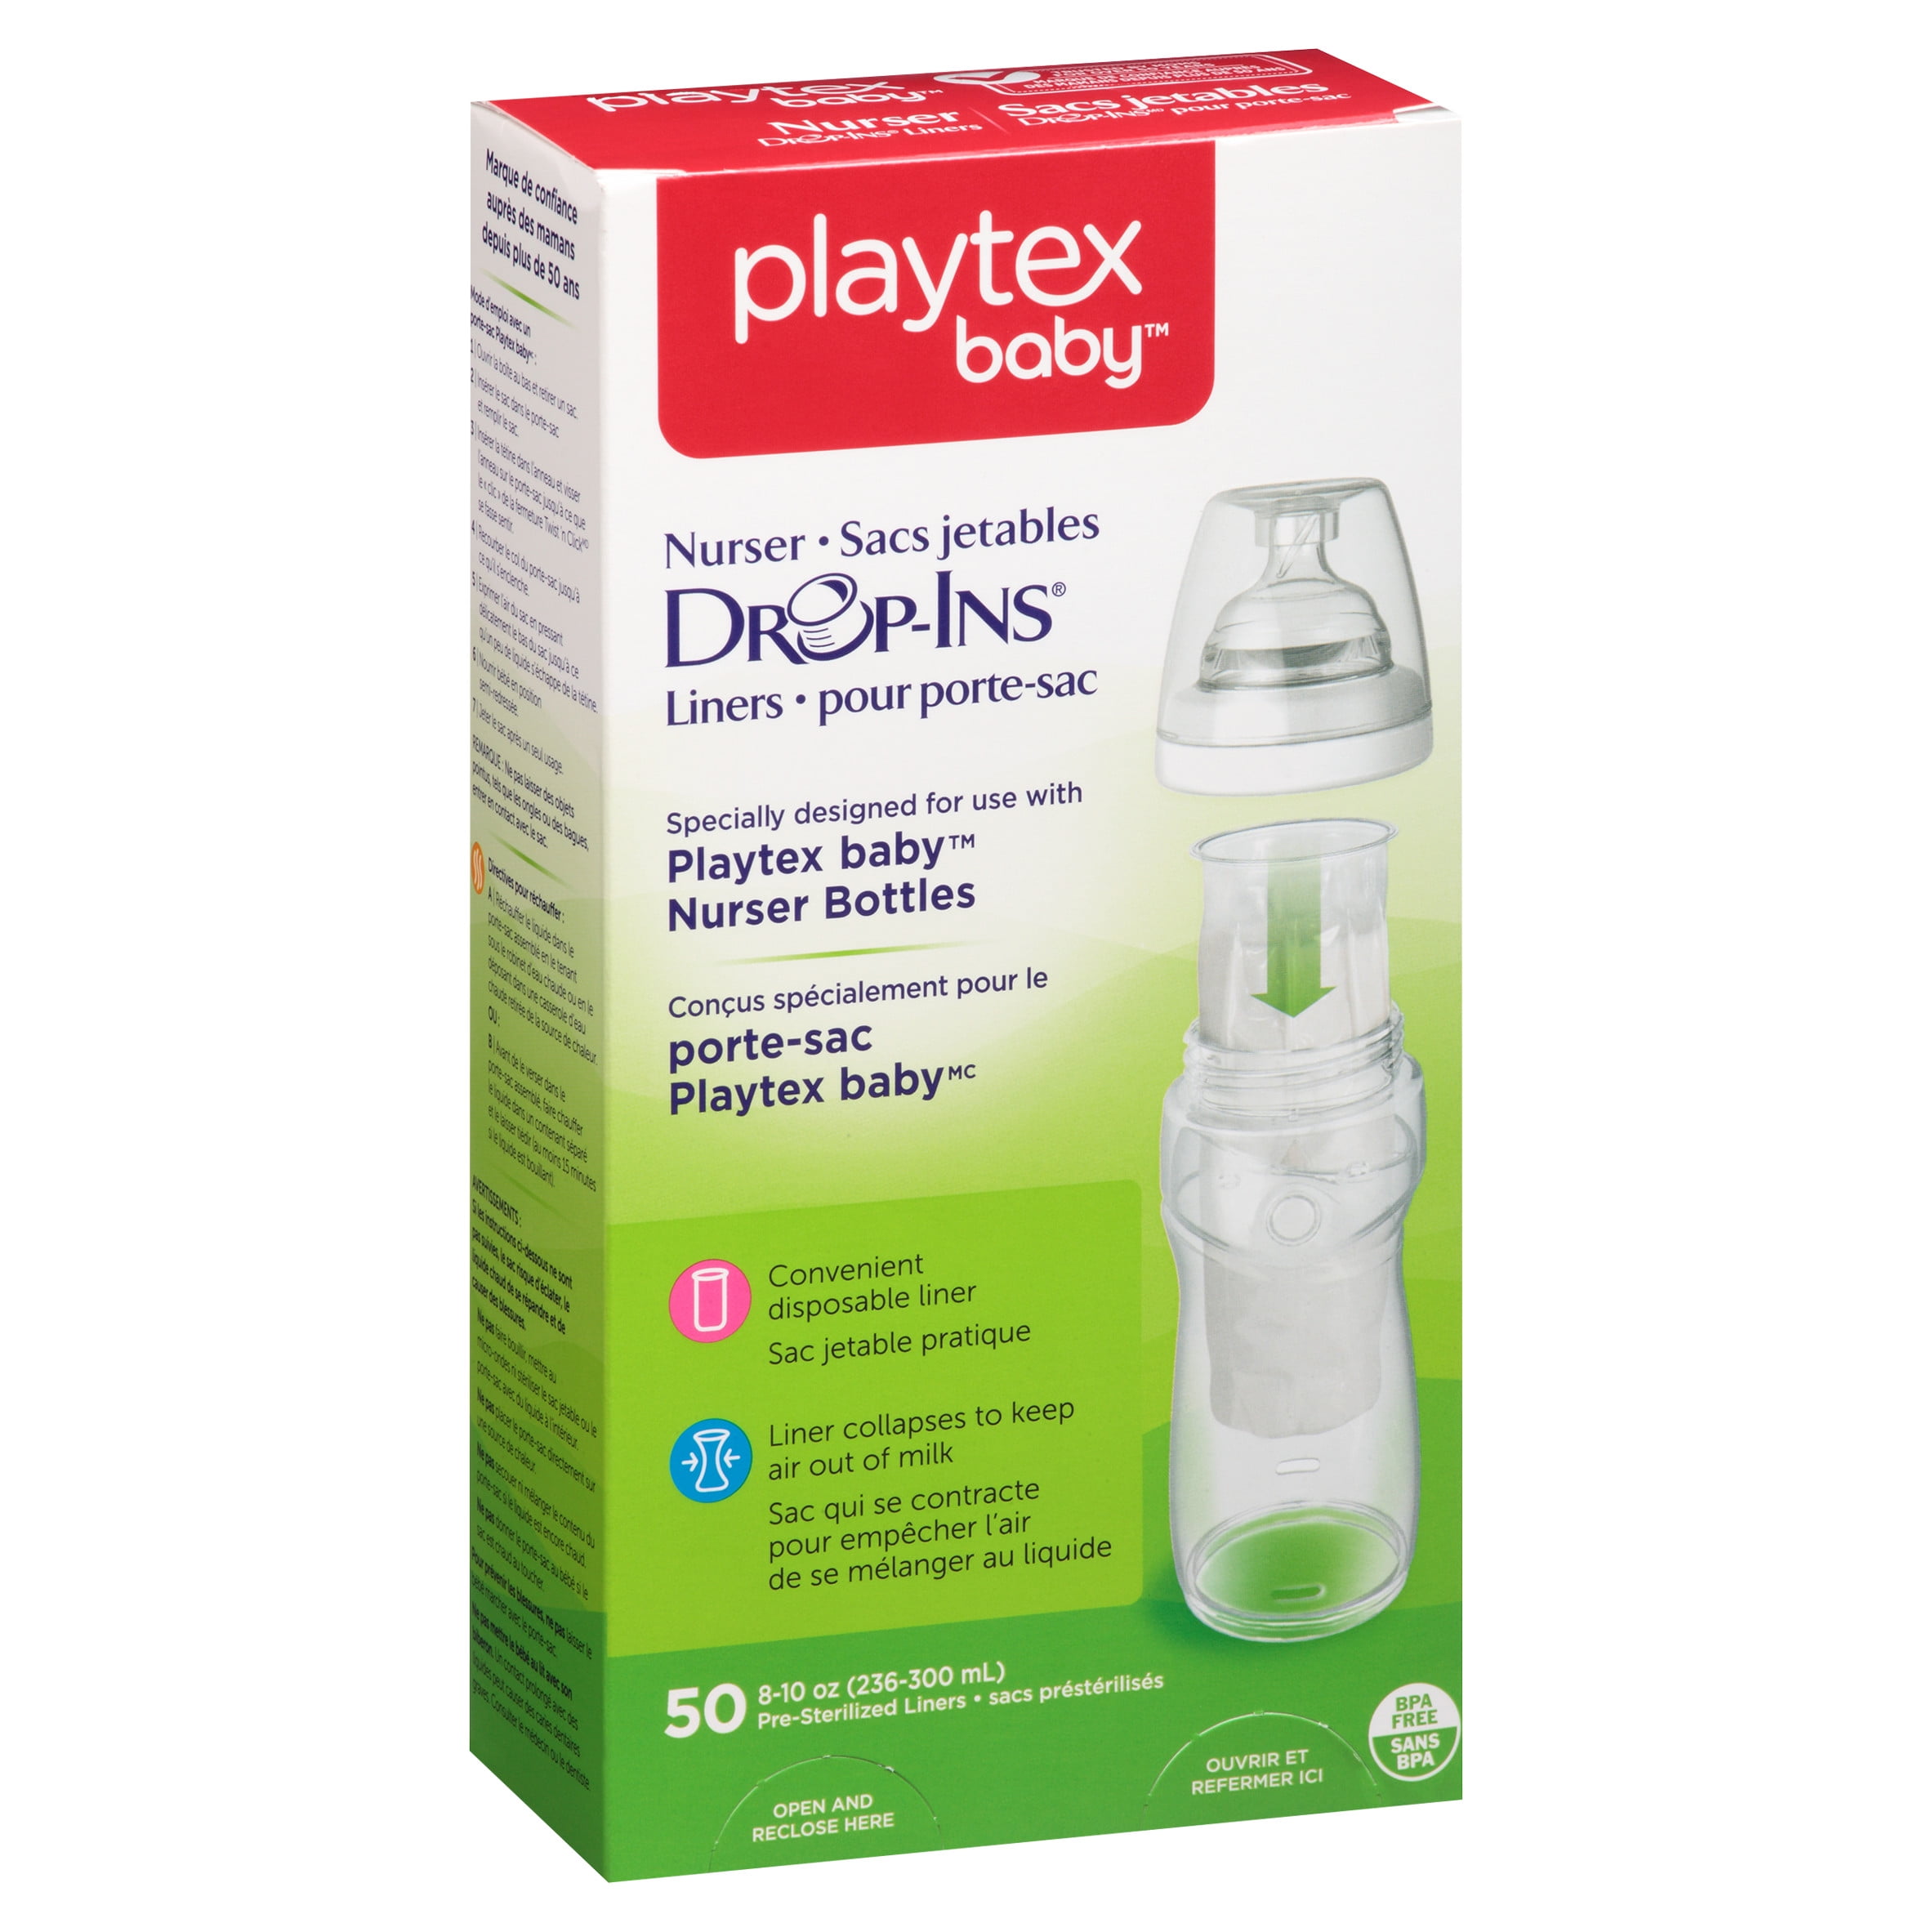 Lot of 3 Playtex Nurser Drop-Ins Liners for Baby Bottles 8-10 oz 50 ct each 